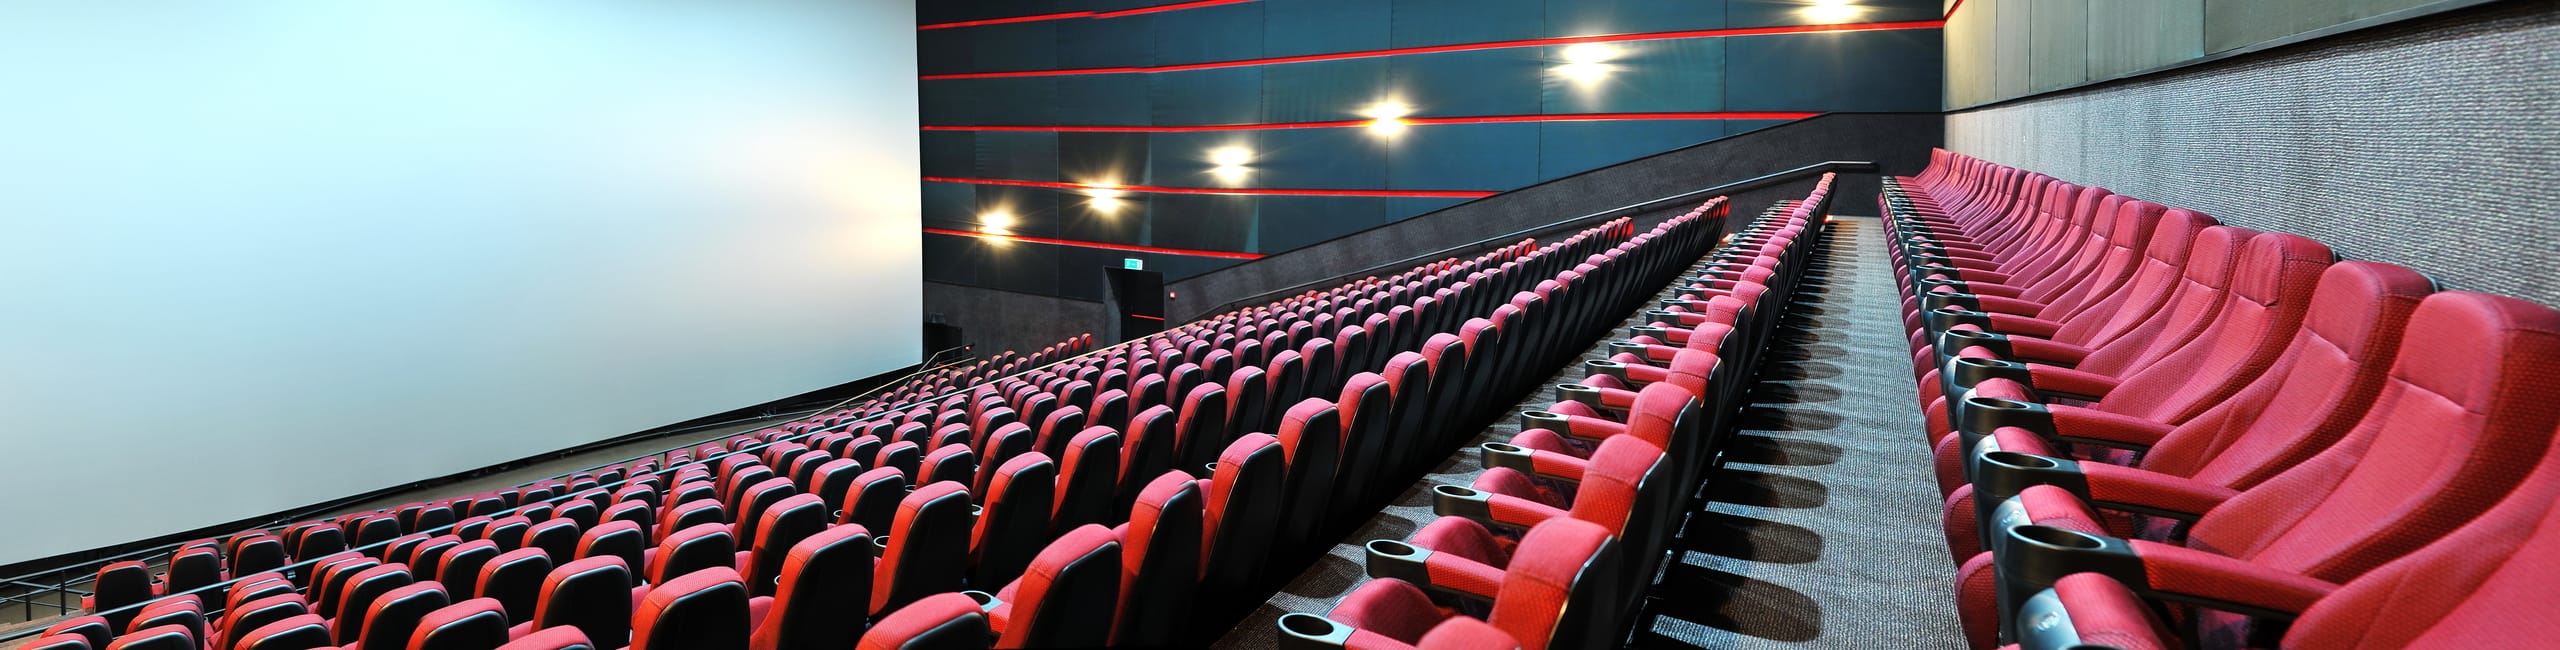 Sala de Cinema vazia.